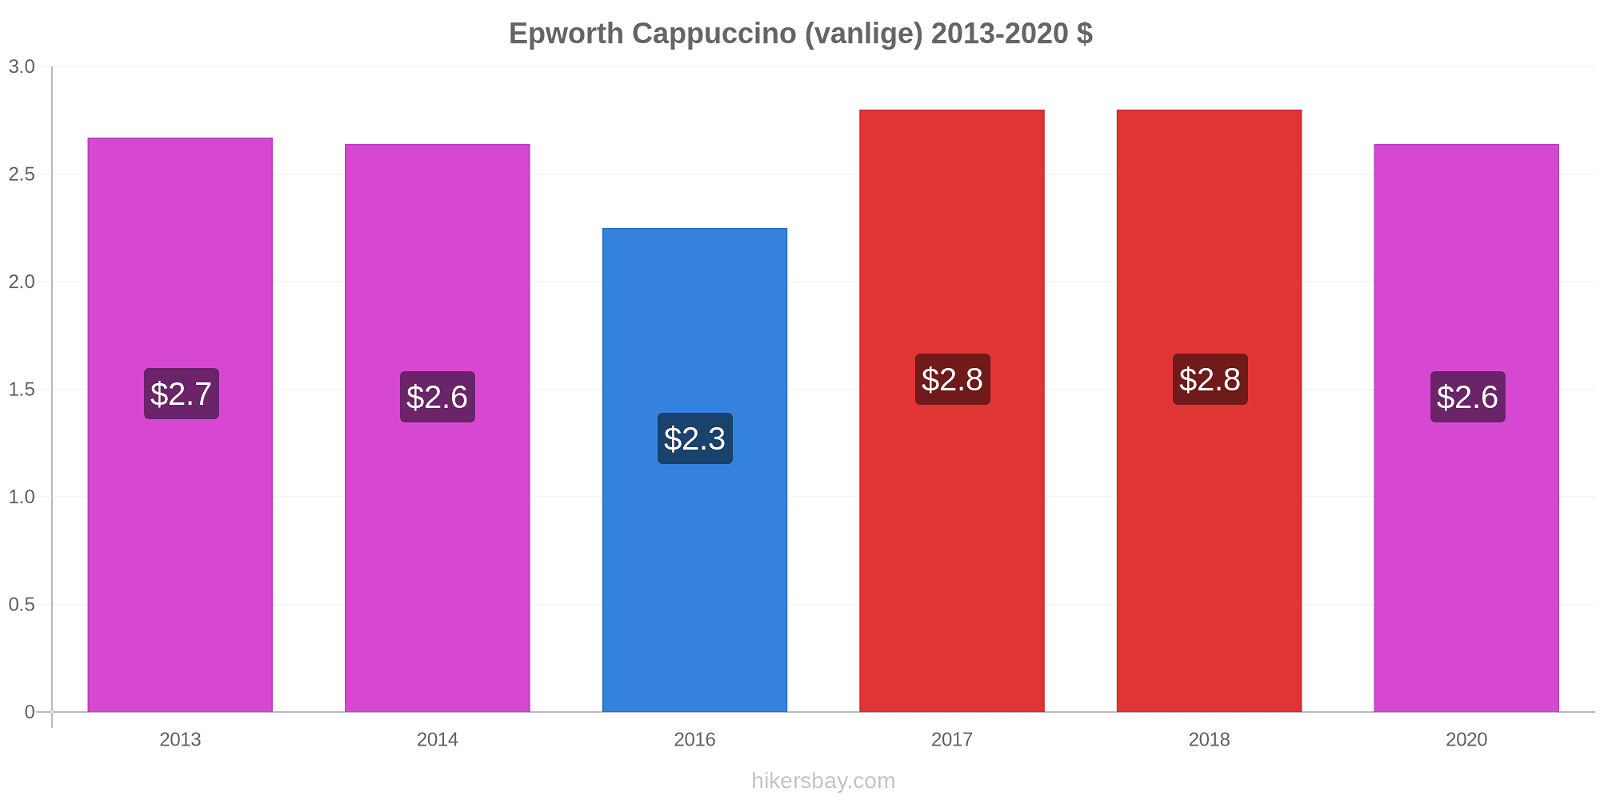 Epworth prisendringer Cappuccino (vanlige) hikersbay.com